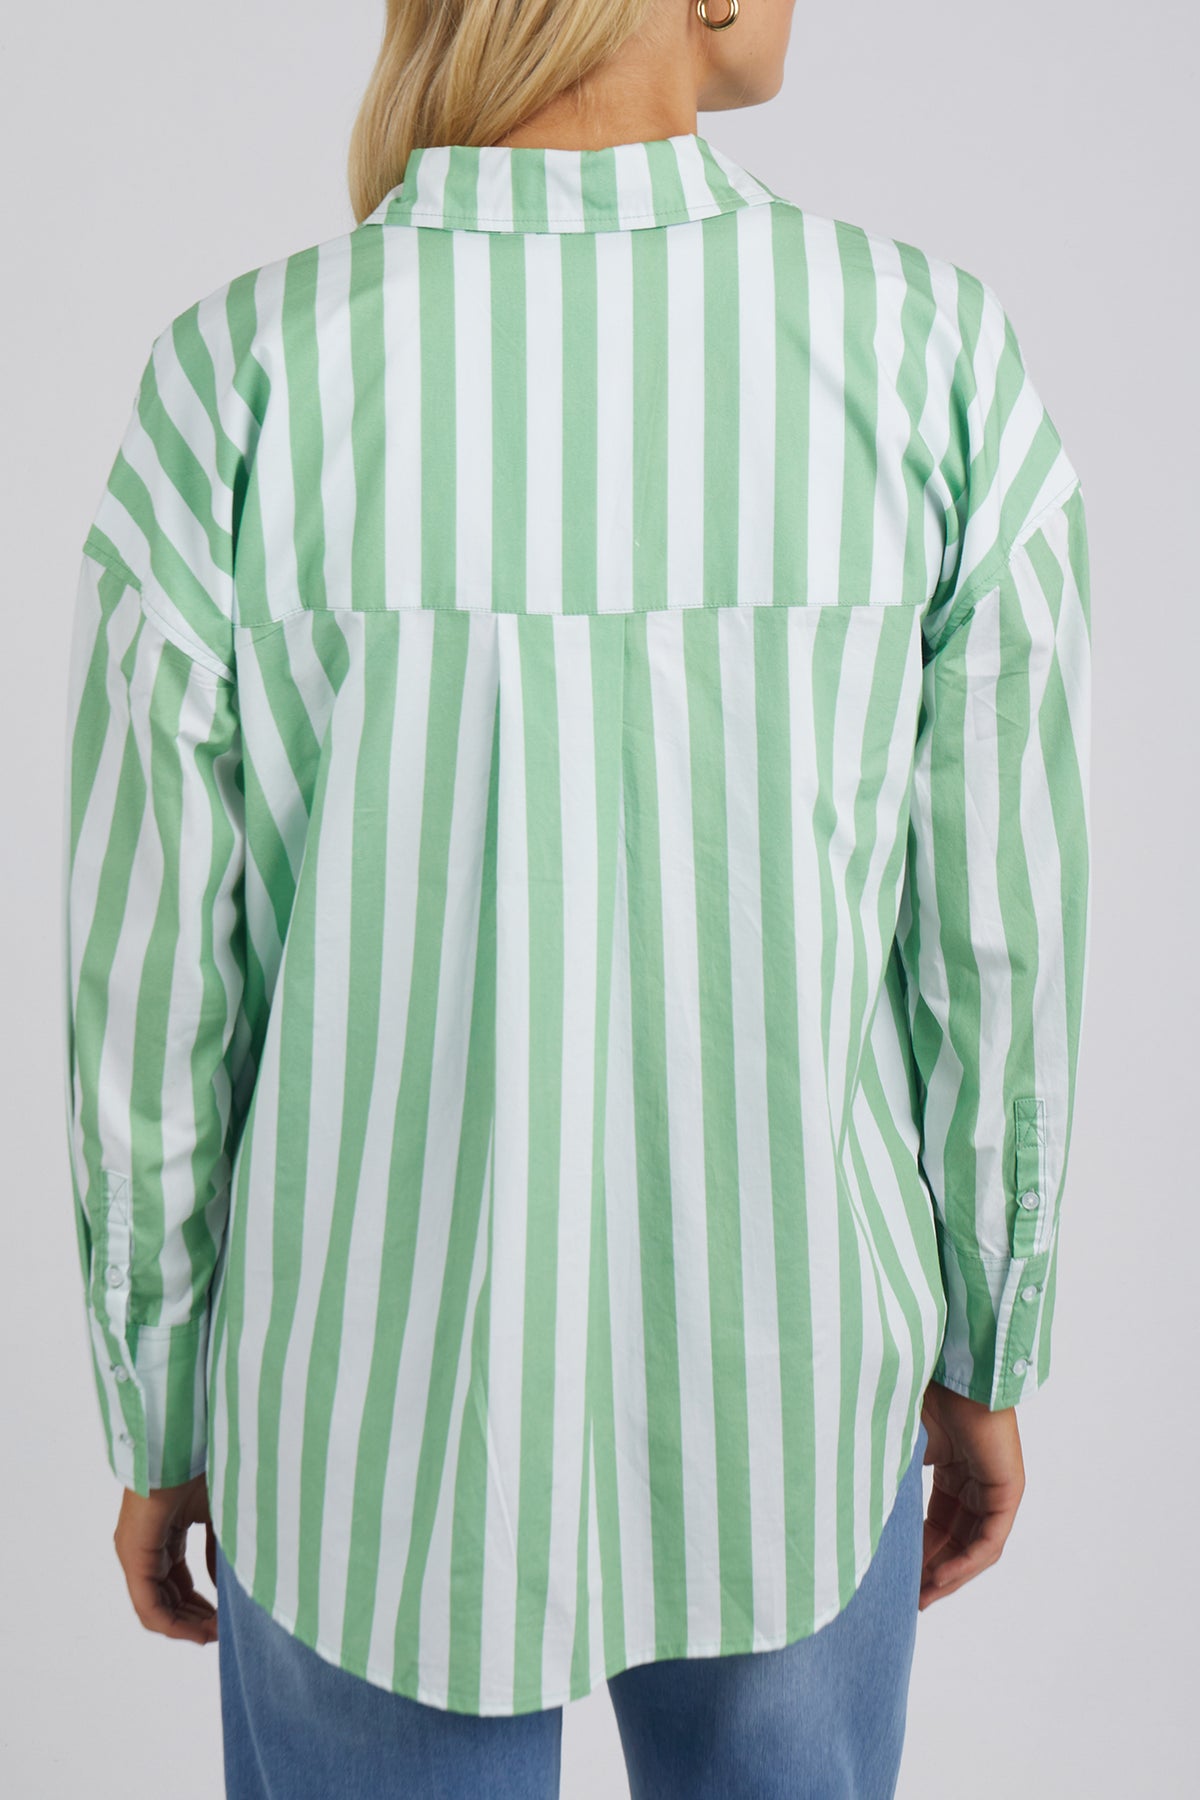 Delia Shirt Meadow & White Stripe